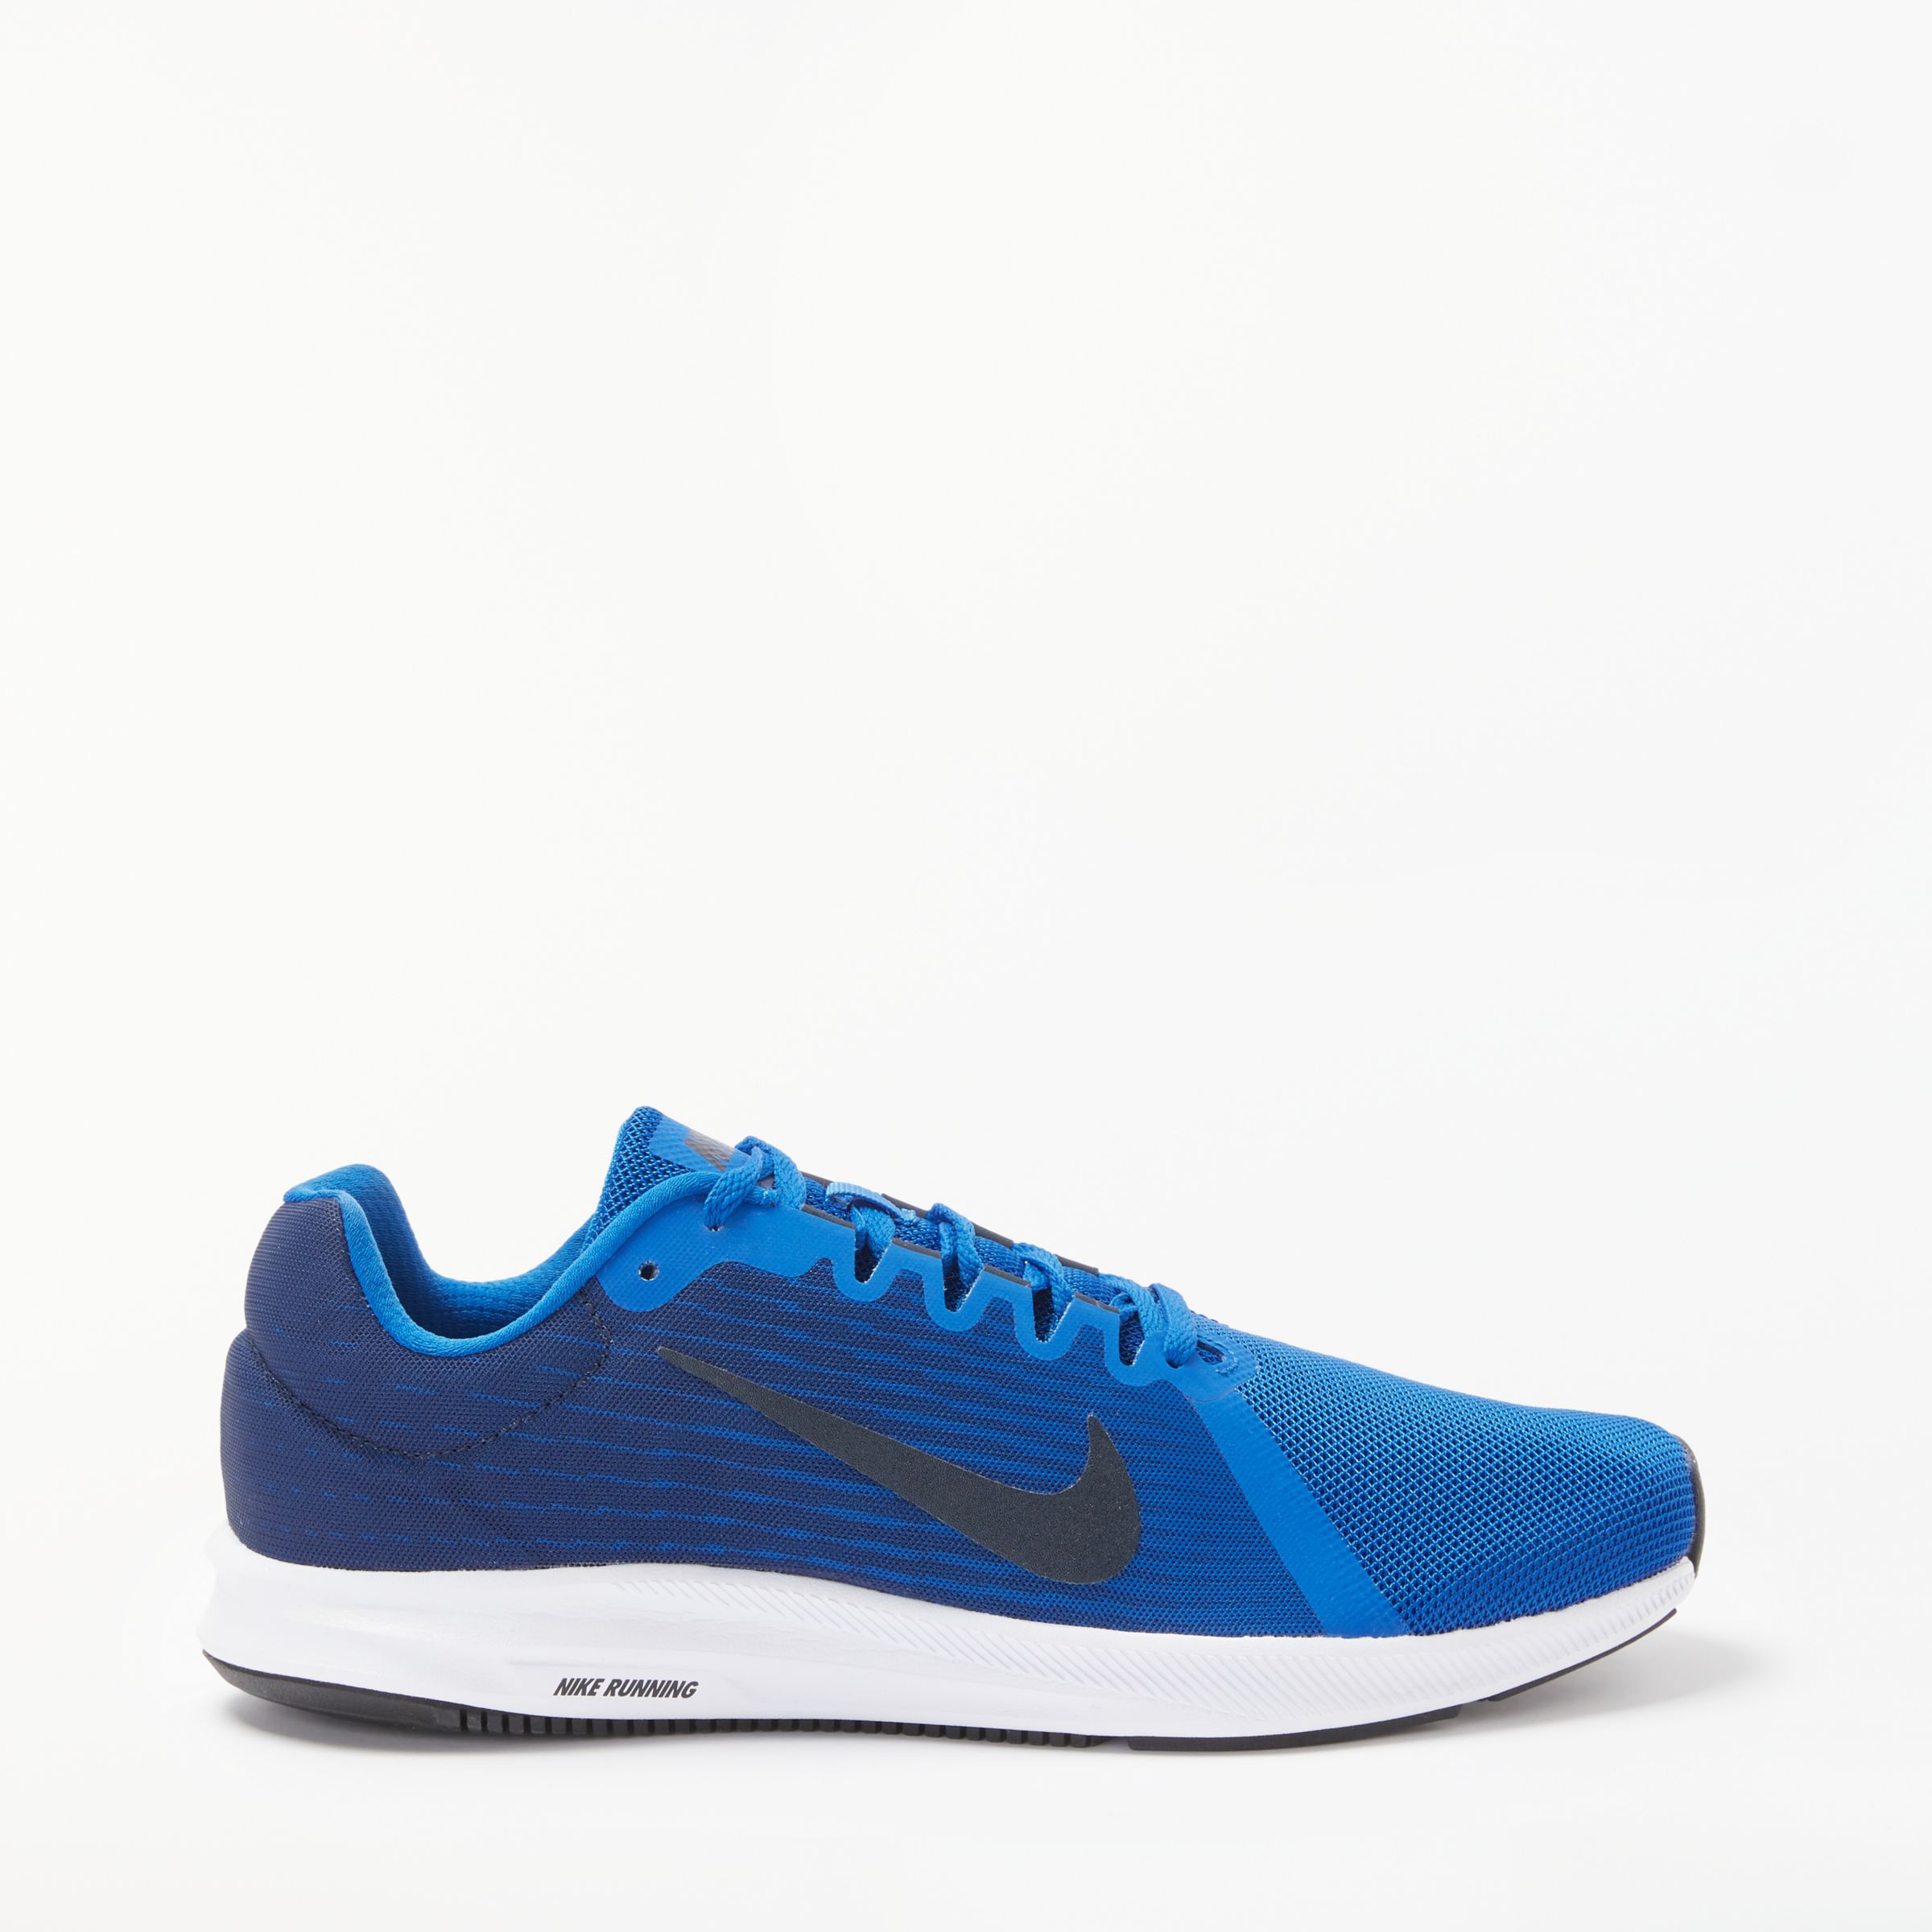 Nike Downshifter 8 Running Shoes, Blue/Black/White